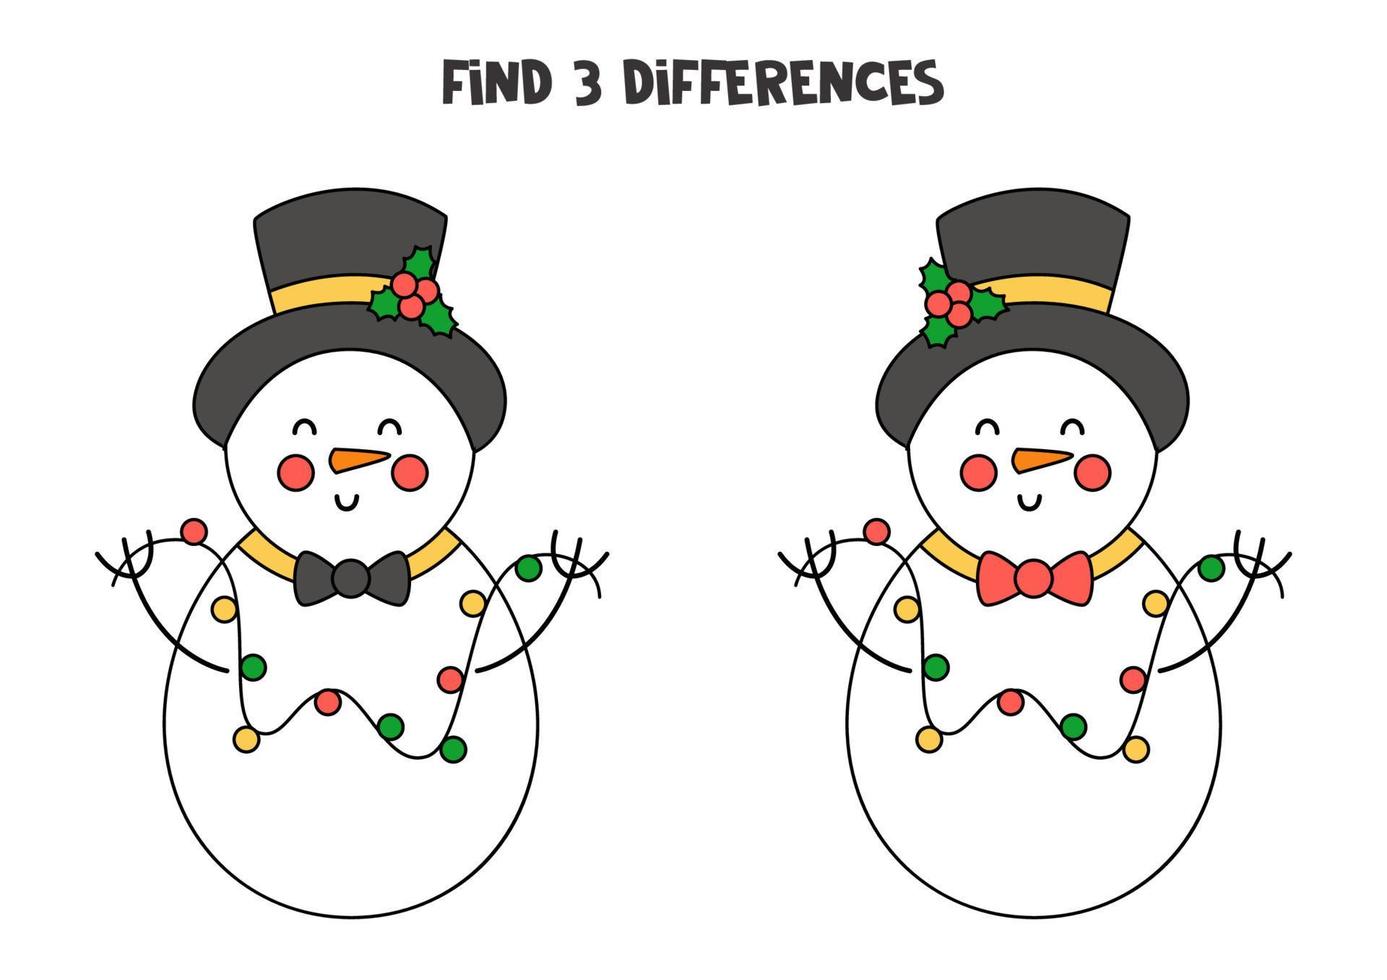 Find 3 differences between two cartoon snowmen. vector